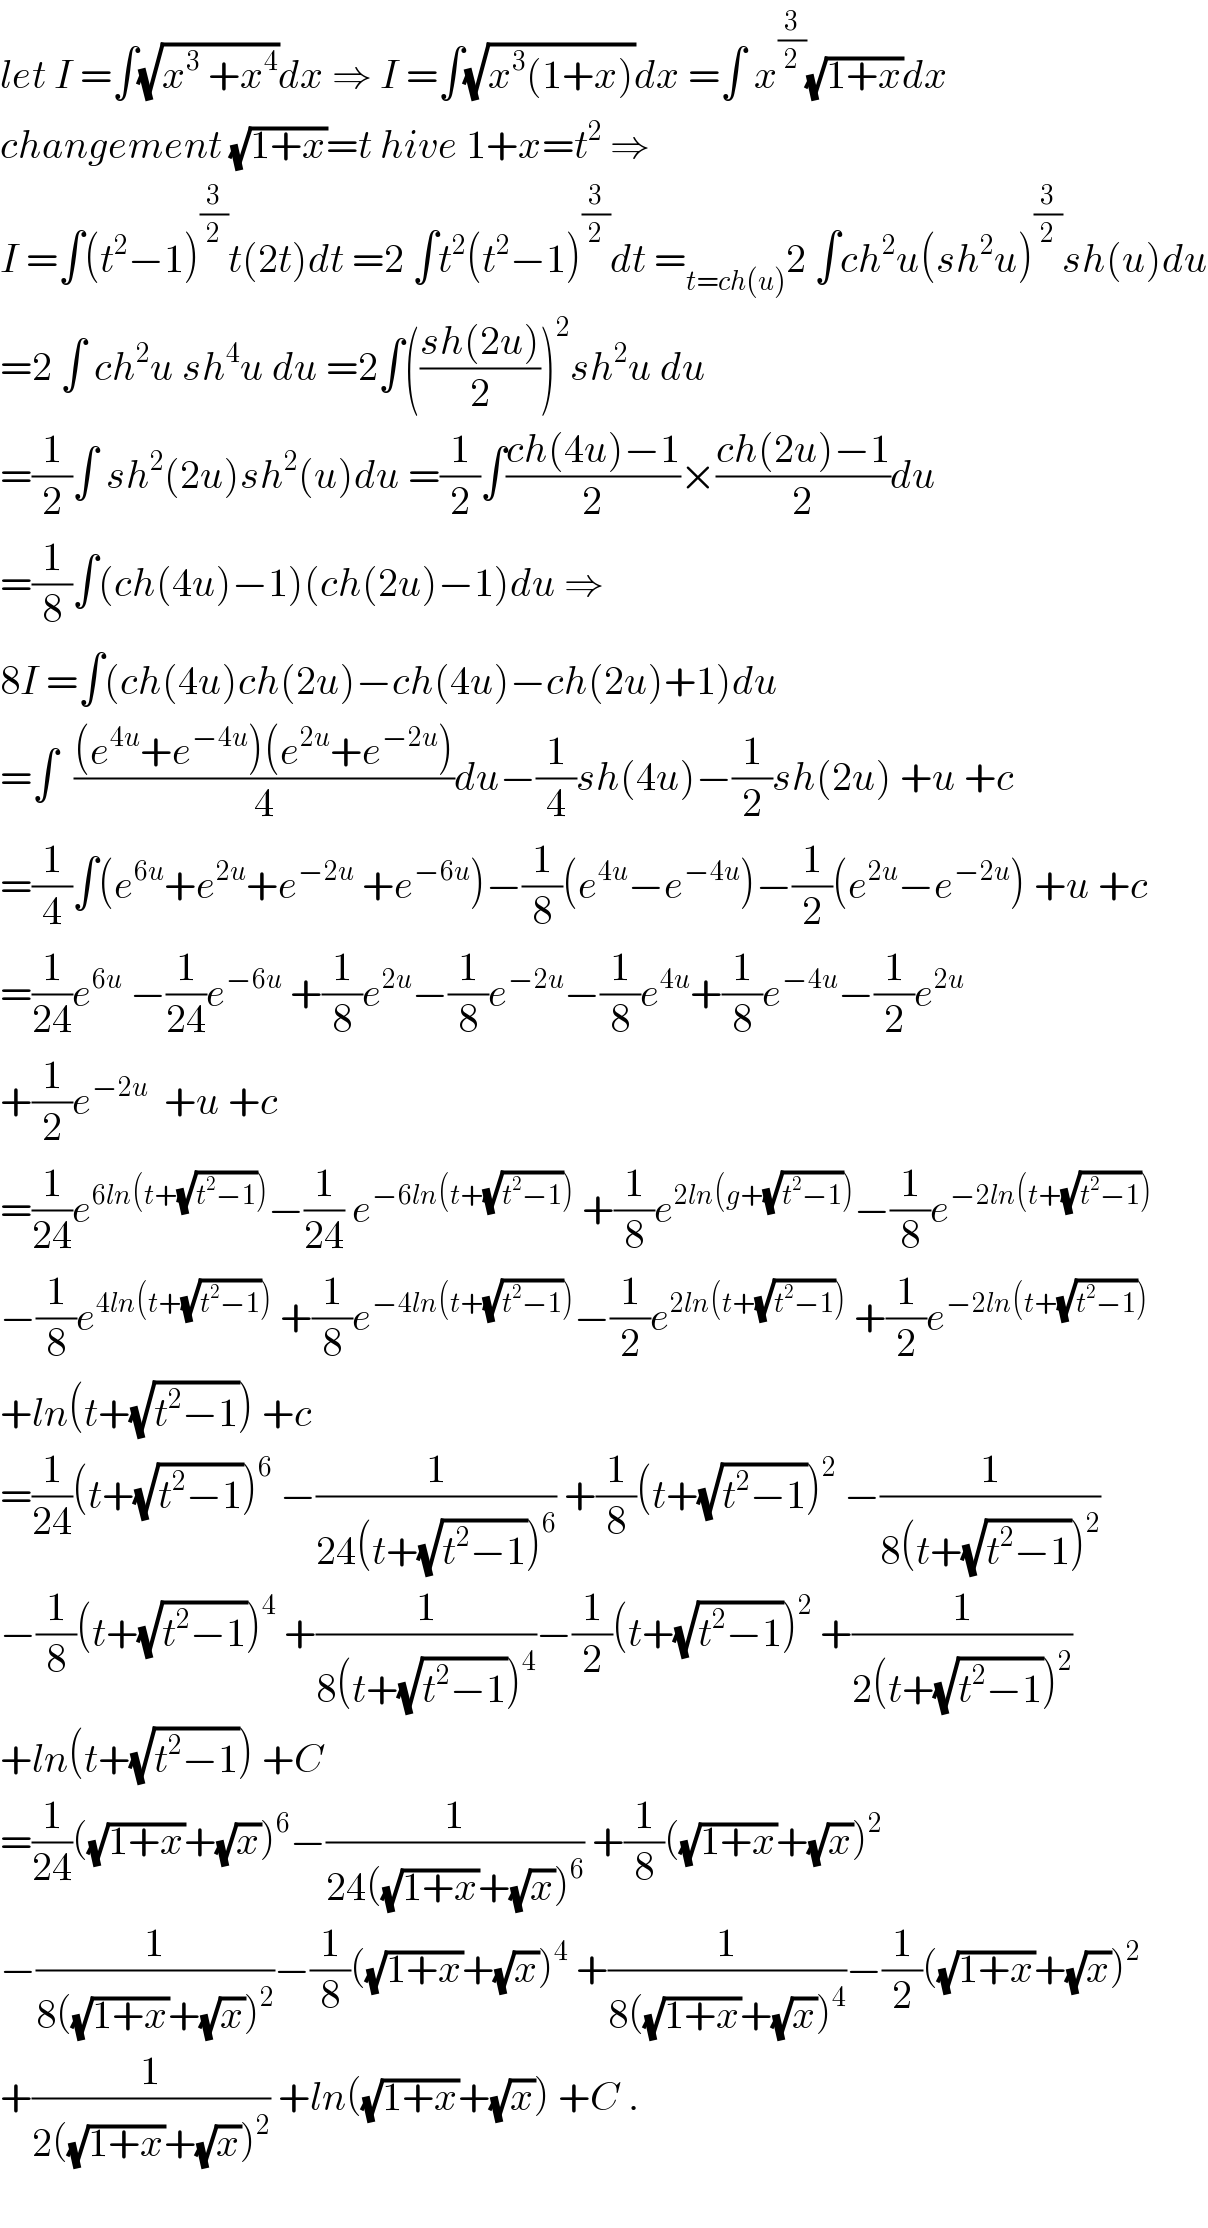 let I =∫(√(x^3  +x^4 ))dx ⇒ I =∫(√(x^3 (1+x)))dx =∫ x^(3/2) (√(1+x))dx  changement (√(1+x))=t hive 1+x=t^2  ⇒  I =∫(t^2 −1)^(3/2) t(2t)dt =2 ∫t^2 (t^2 −1)^(3/2) dt =_(t=ch(u)) 2 ∫ch^2 u(sh^2 u)^(3/2) sh(u)du  =2 ∫ ch^2 u sh^4 u du =2∫(((sh(2u))/2))^2 sh^2 u du  =(1/2)∫ sh^2 (2u)sh^2 (u)du =(1/2)∫((ch(4u)−1)/2)×((ch(2u)−1)/2)du  =(1/8)∫(ch(4u)−1)(ch(2u)−1)du ⇒  8I =∫(ch(4u)ch(2u)−ch(4u)−ch(2u)+1)du  =∫  (((e^(4u) +e^(−4u) )(e^(2u) +e^(−2u) ))/4)du−(1/4)sh(4u)−(1/2)sh(2u) +u +c  =(1/4)∫(e^(6u) +e^(2u) +e^(−2u)  +e^(−6u) )−(1/8)(e^(4u) −e^(−4u) )−(1/2)(e^(2u) −e^(−2u) ) +u +c  =(1/(24))e^(6u)  −(1/(24))e^(−6u)  +(1/8)e^(2u) −(1/8)e^(−2u) −(1/8)e^(4u) +(1/8)e^(−4u) −(1/2)e^(2u)   +(1/2)e^(−2u)   +u +c  =(1/(24))e^(6ln(t+(√(t^2 −1)))) −(1/(24)) e^(−6ln(t+(√(t^2 −1))))  +(1/8)e^(2ln(g+(√(t^2 −1)))) −(1/8)e^(−2ln(t+(√(t^2 −1))))   −(1/8)e^(4ln(t+(√(t^2 −1))))  +(1/8)e^(−4ln(t+(√(t^2 −1)))) −(1/2)e^(2ln(t+(√(t^2 −1))))  +(1/2)e^(−2ln(t+(√(t^2 −1))))   +ln(t+(√(t^2 −1))) +c  =(1/(24))(t+(√(t^2 −1)))^6  −(1/(24(t+(√(t^2 −1)))^6 )) +(1/8)(t+(√(t^2 −1)))^2  −(1/(8(t+(√(t^2 −1)))^2 ))  −(1/8)(t+(√(t^2 −1)))^4  +(1/(8(t+(√(t^2 −1)))^4 ))−(1/2)(t+(√(t^2 −1)))^2  +(1/(2(t+(√(t^2 −1)))^2 ))  +ln(t+(√(t^2 −1))) +C  =(1/(24))((√(1+x))+(√x))^6 −(1/(24((√(1+x))+(√x))^6 )) +(1/8)((√(1+x))+(√x))^2   −(1/(8((√(1+x))+(√x))^2 ))−(1/8)((√(1+x))+(√x))^4  +(1/(8((√(1+x))+(√x))^4 ))−(1/2)((√(1+x))+(√x))^2   +(1/(2((√(1+x))+(√x))^2 )) +ln((√(1+x))+(√x)) +C .    